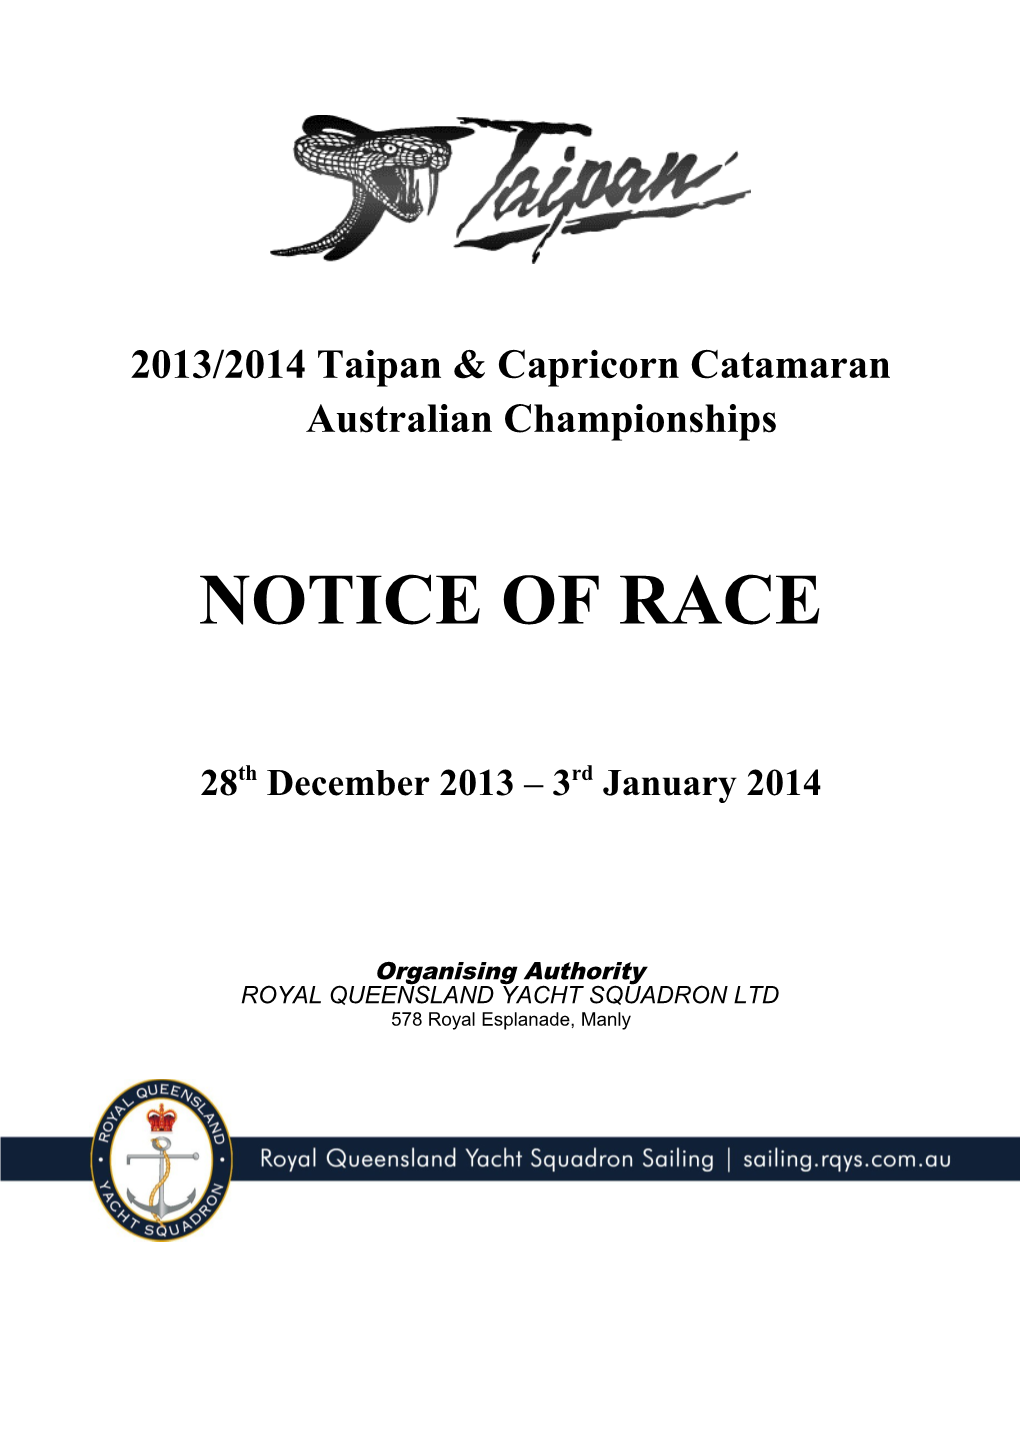 2013/14 Taipan & Capricorn Catamaran Australian Championships Notice of Race